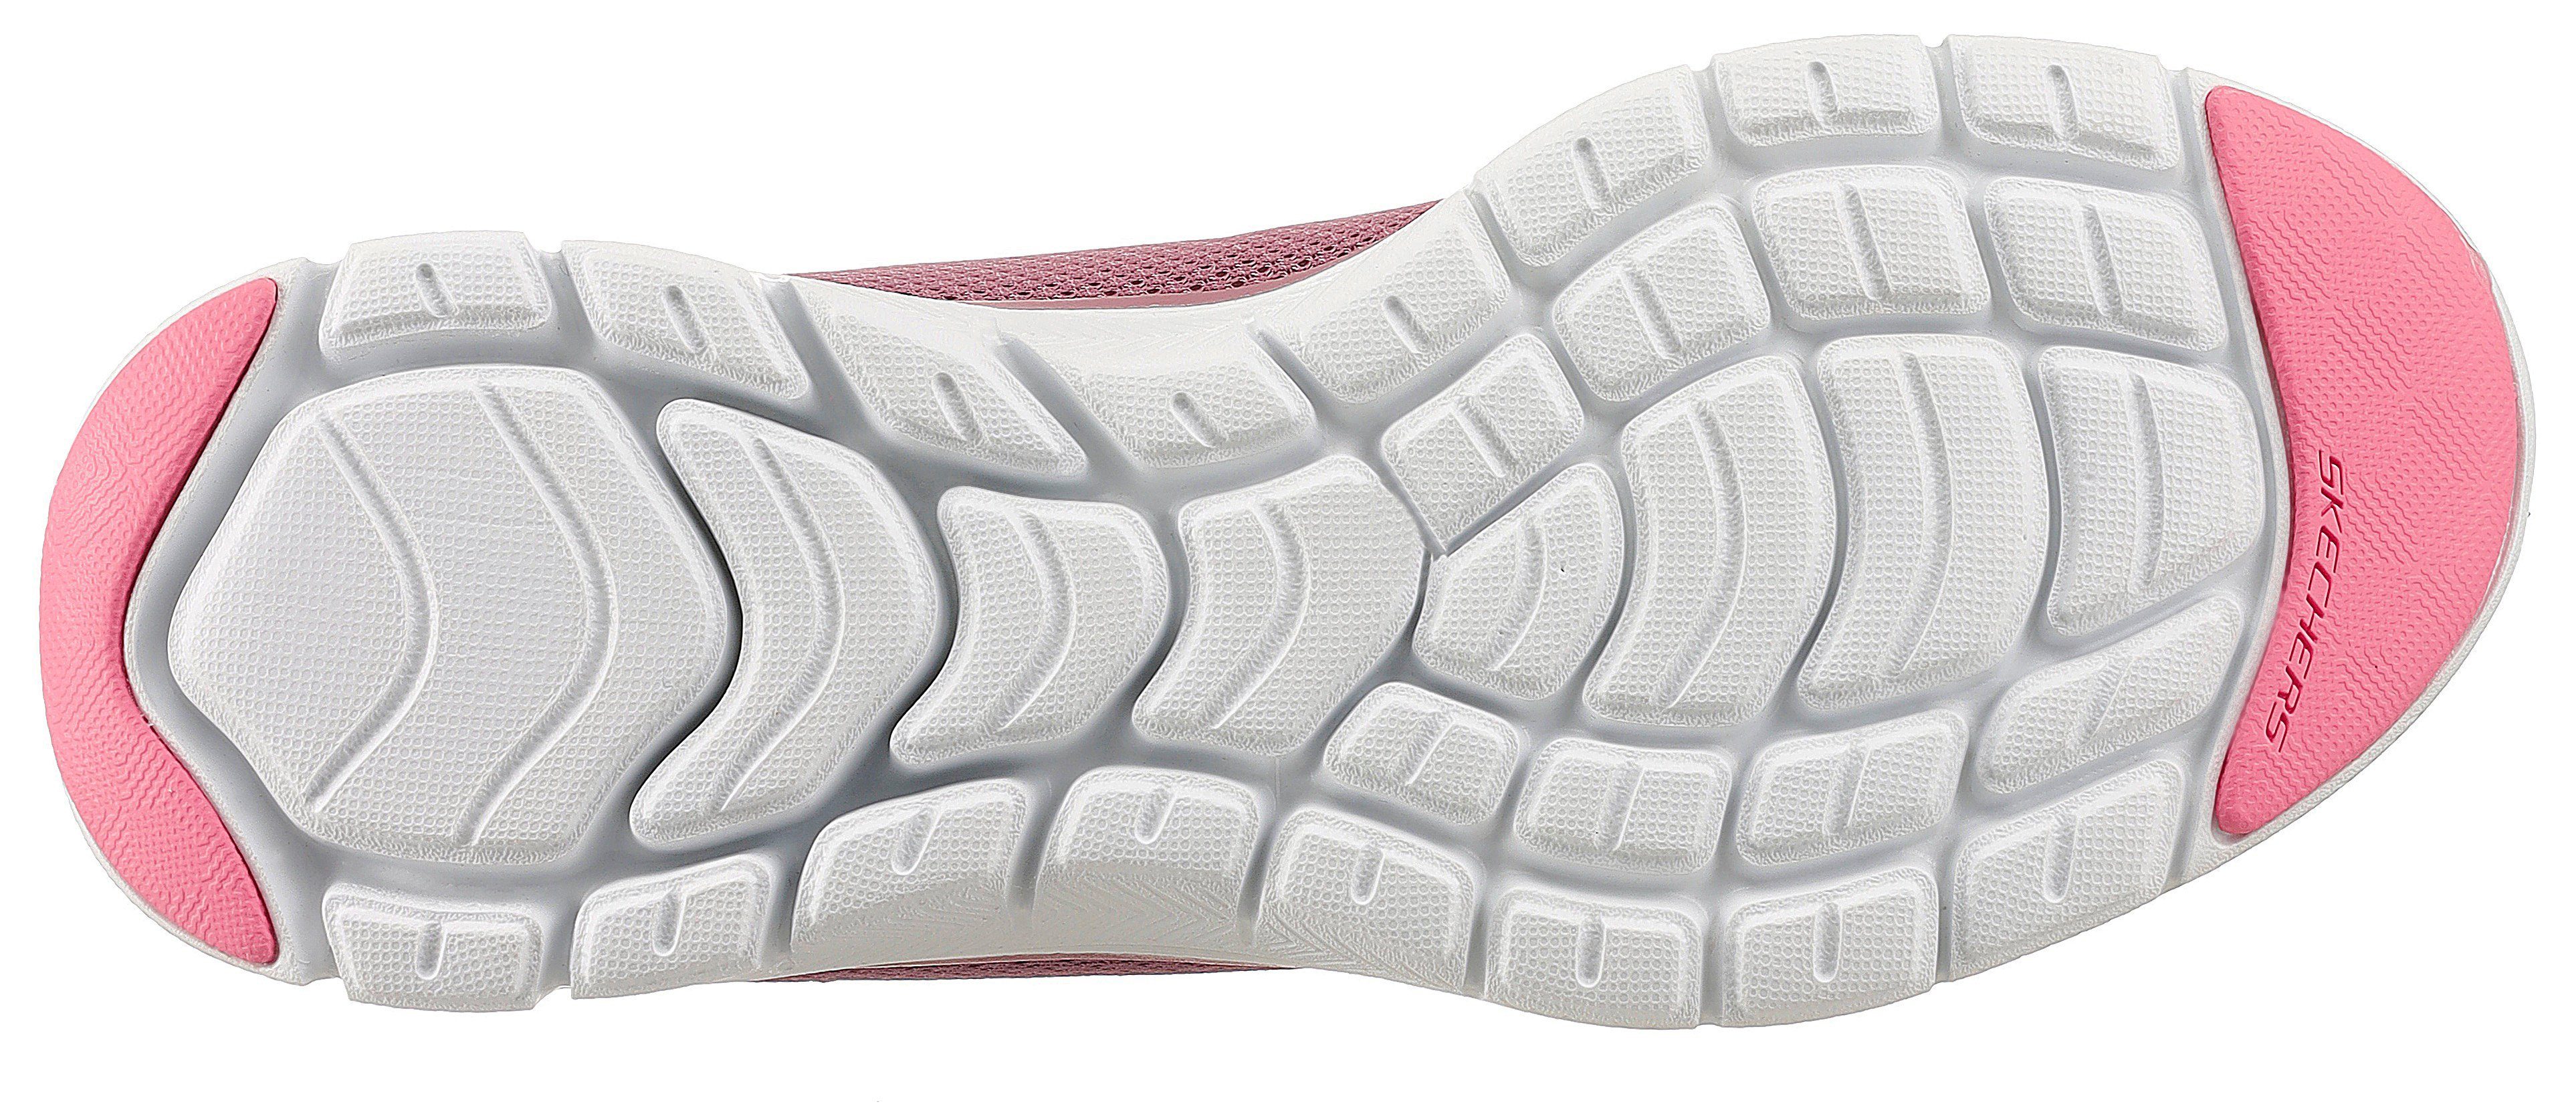 BRILLINAT FLEX Sneaker VIEW Foam APPEAL mauve-rosa Air-Cooled Ausstattung mit Skechers 4.0 Memory